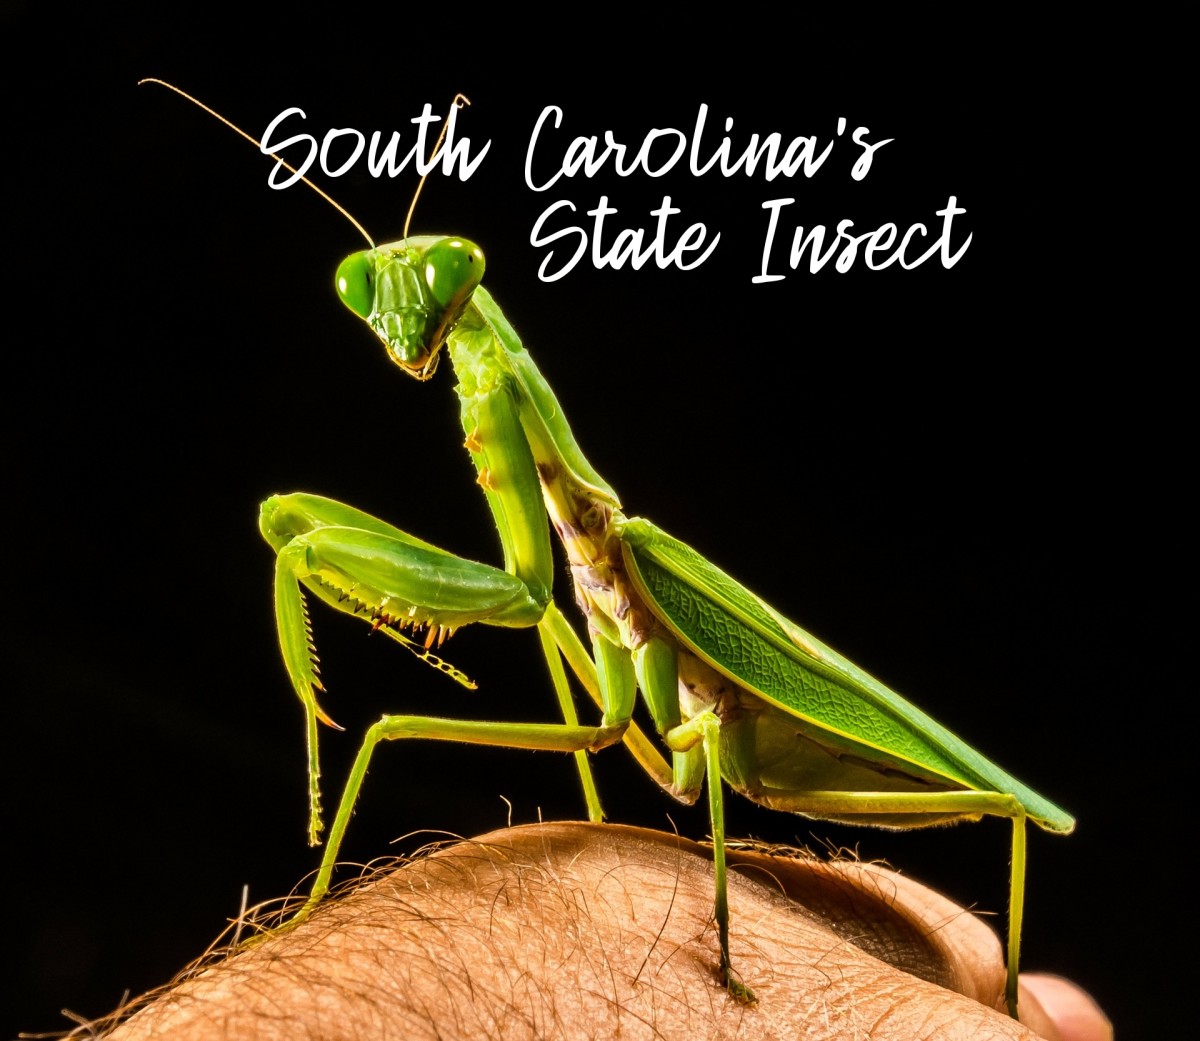 State Insect of South Carolina: The Carolina Mantis